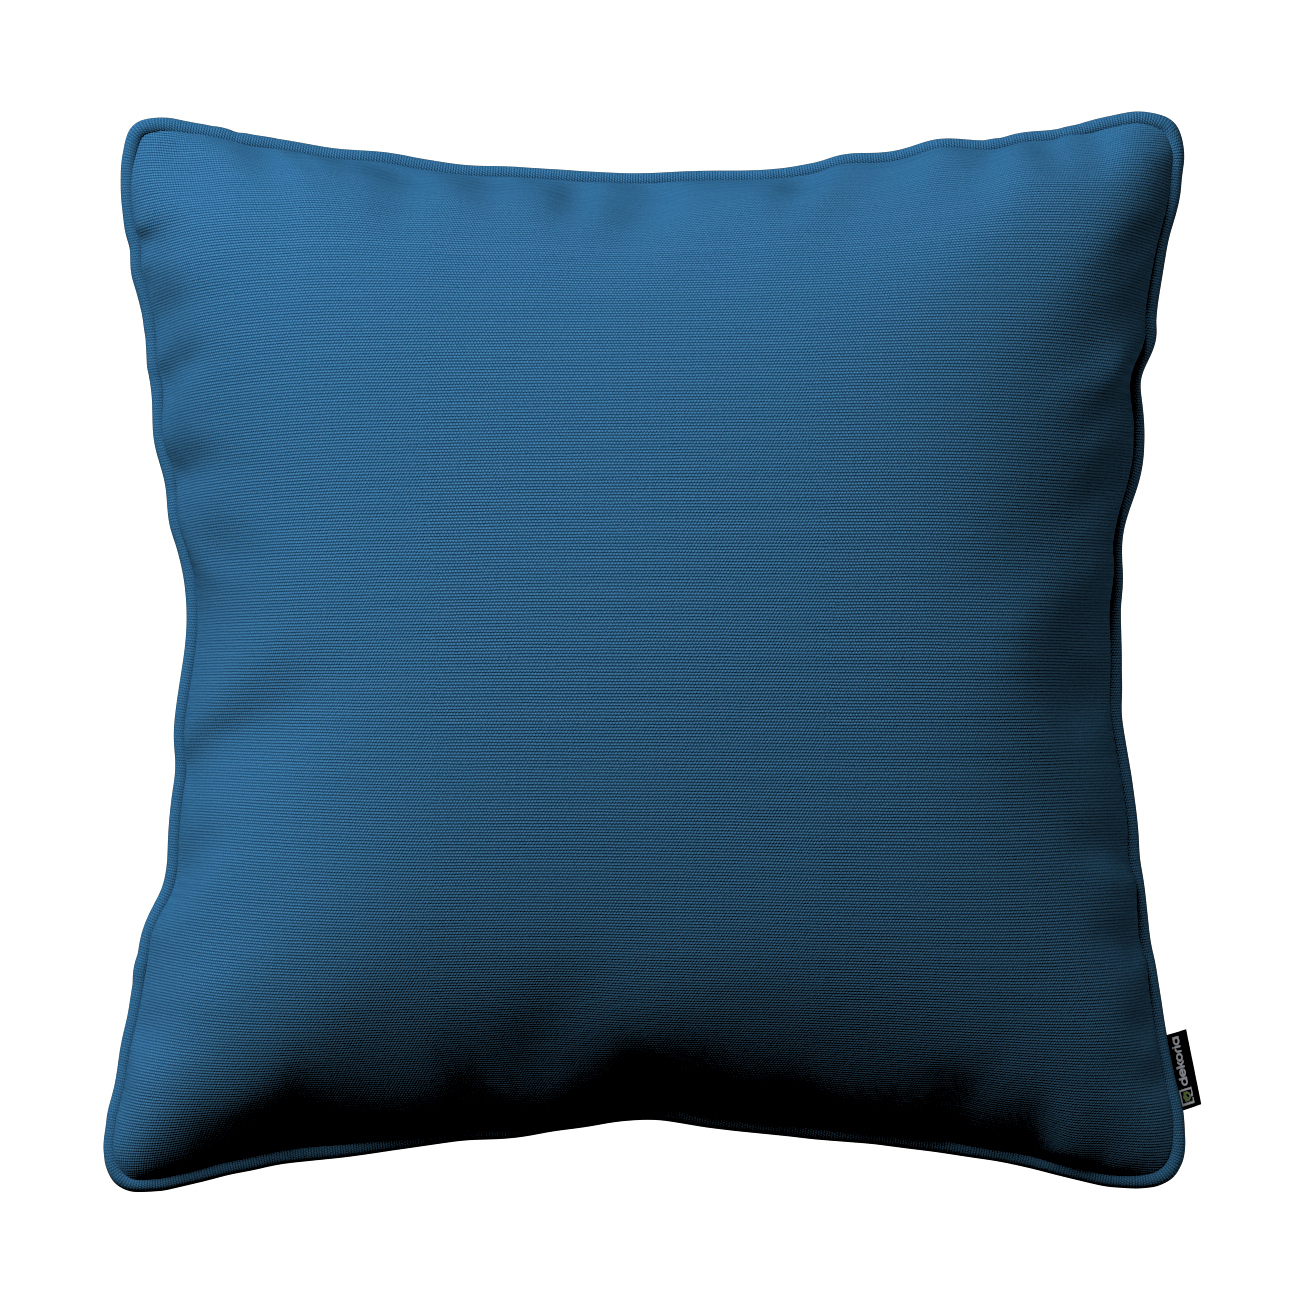 Kissenhülle Gabi mit Paspel, marinenblau , 60 x 60 cm, Cotton Panama (702-4 günstig online kaufen